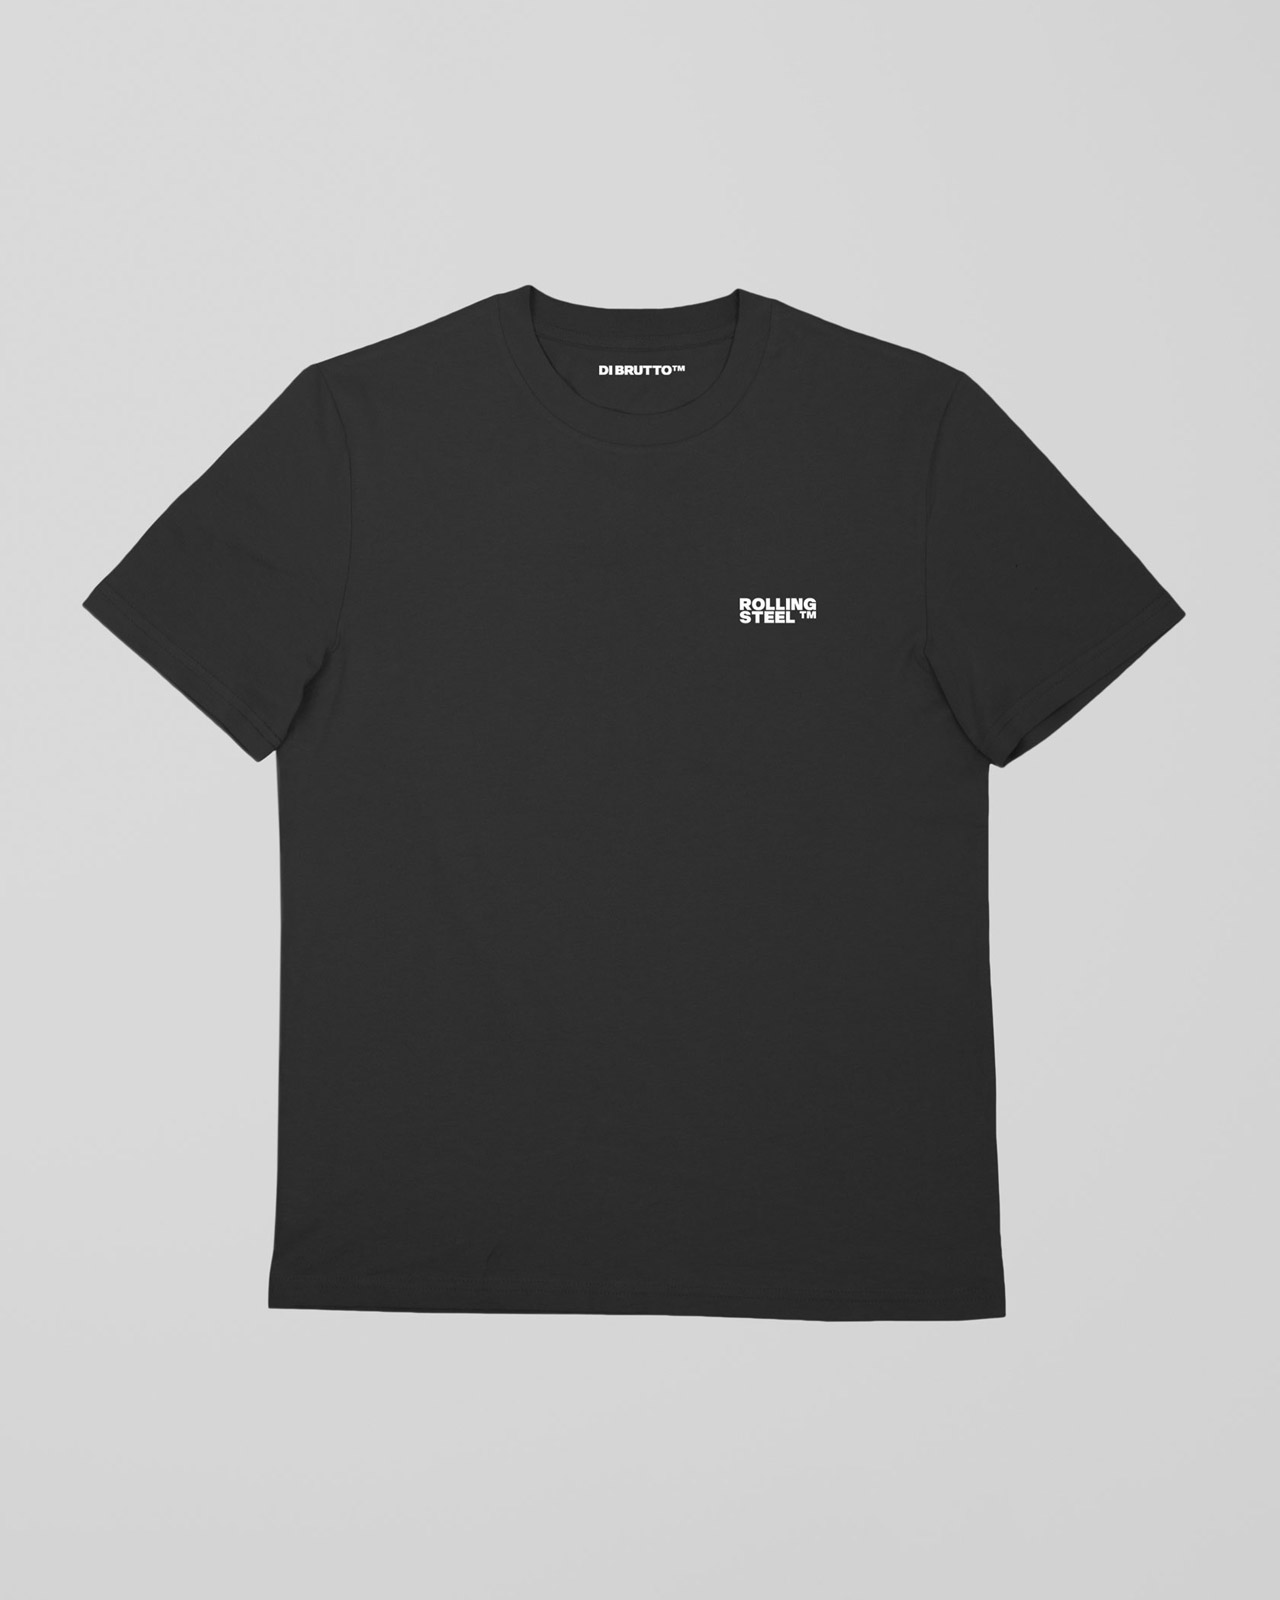 T-Shirt ROLLINGSTEEL Nera logo bianco